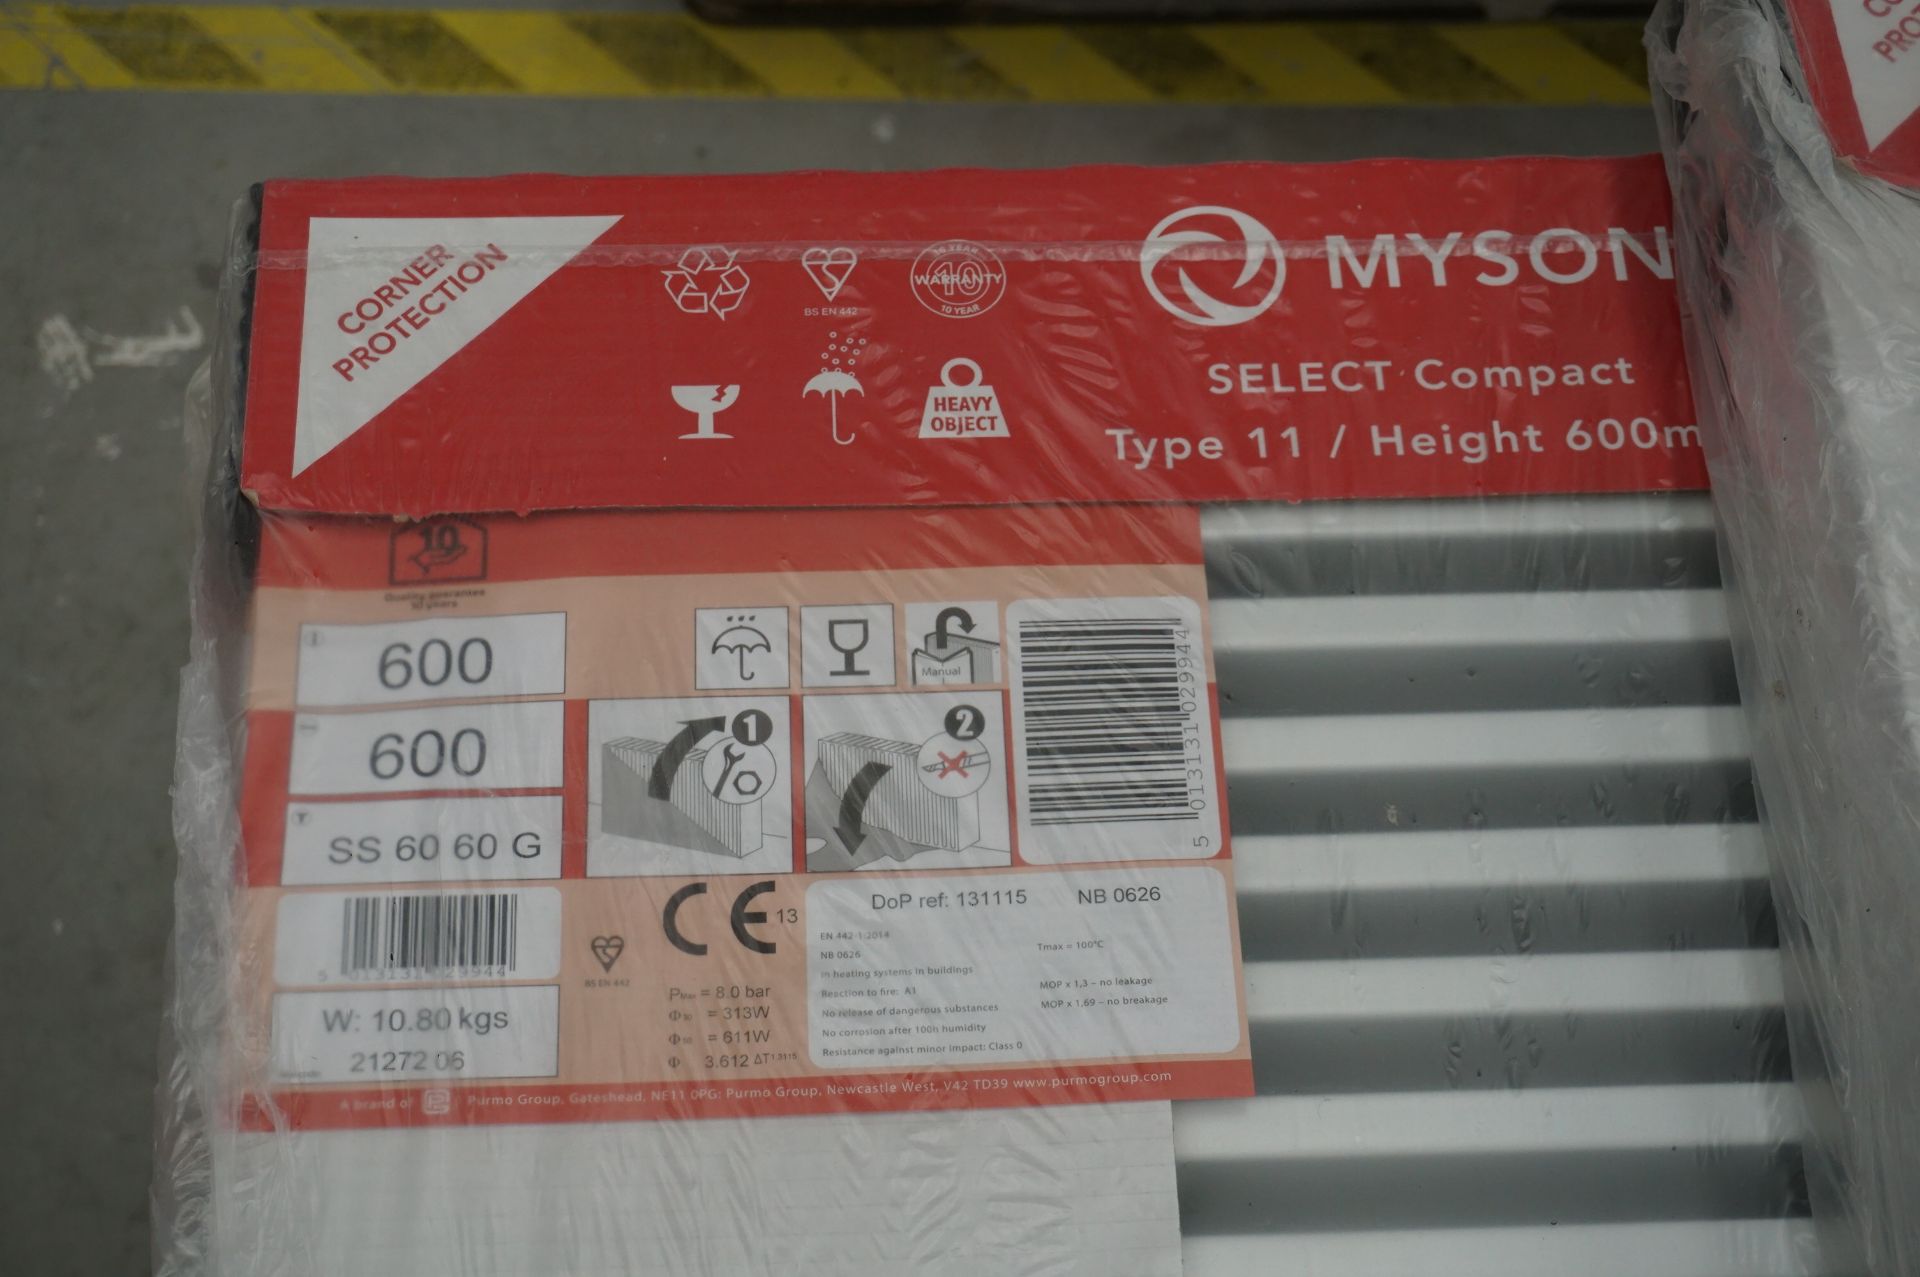 11x (no.) Myson, Select compact SS60 60G Type 11, 600 x 600mm white radiators - Image 3 of 4